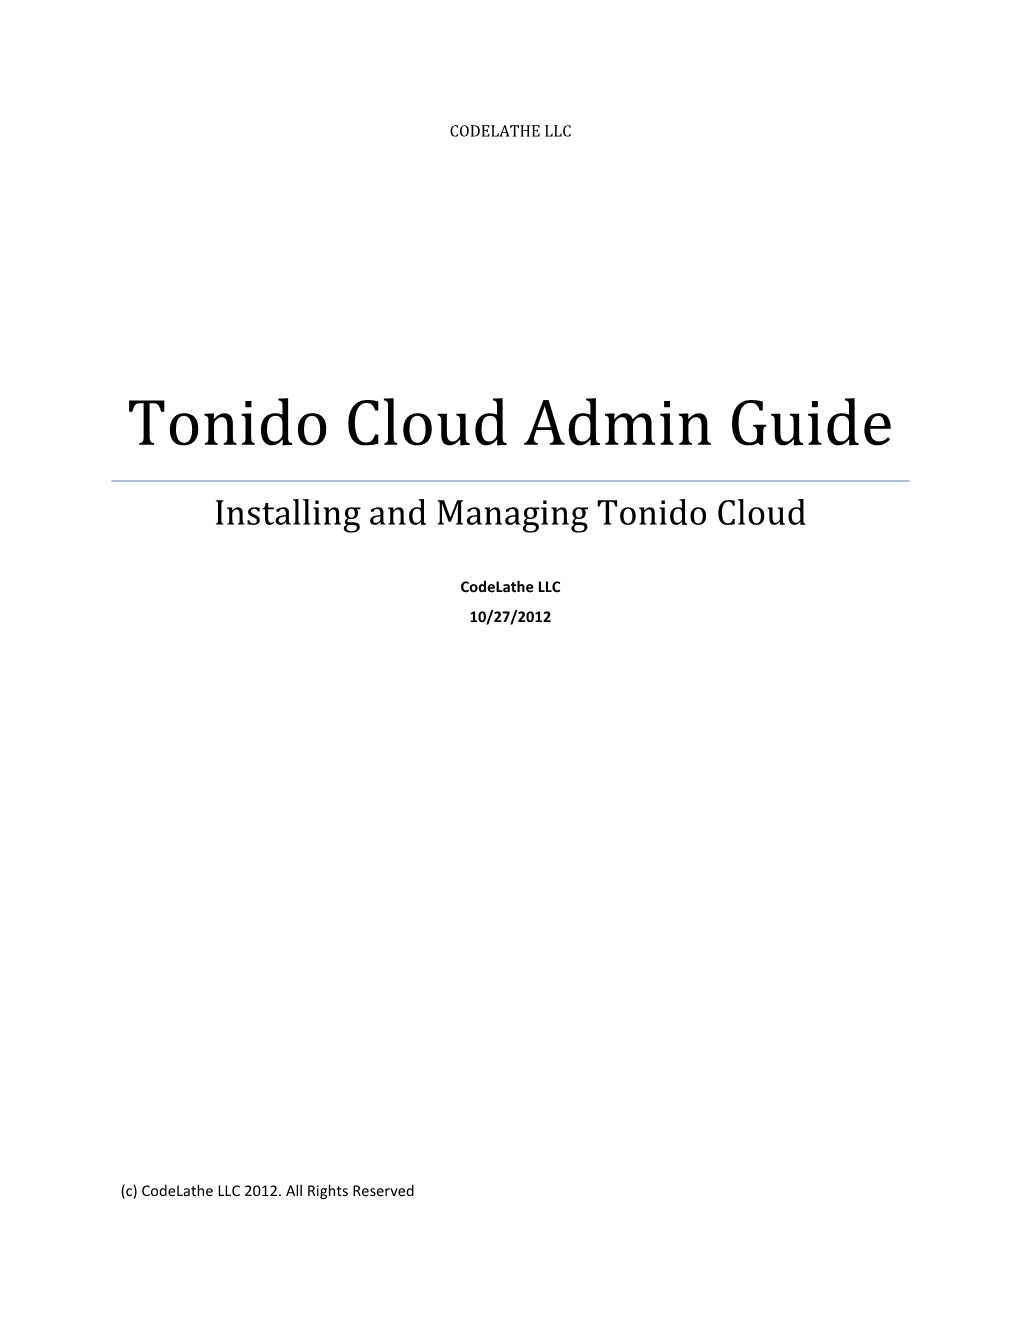 Tonido Cloud Admin Guide